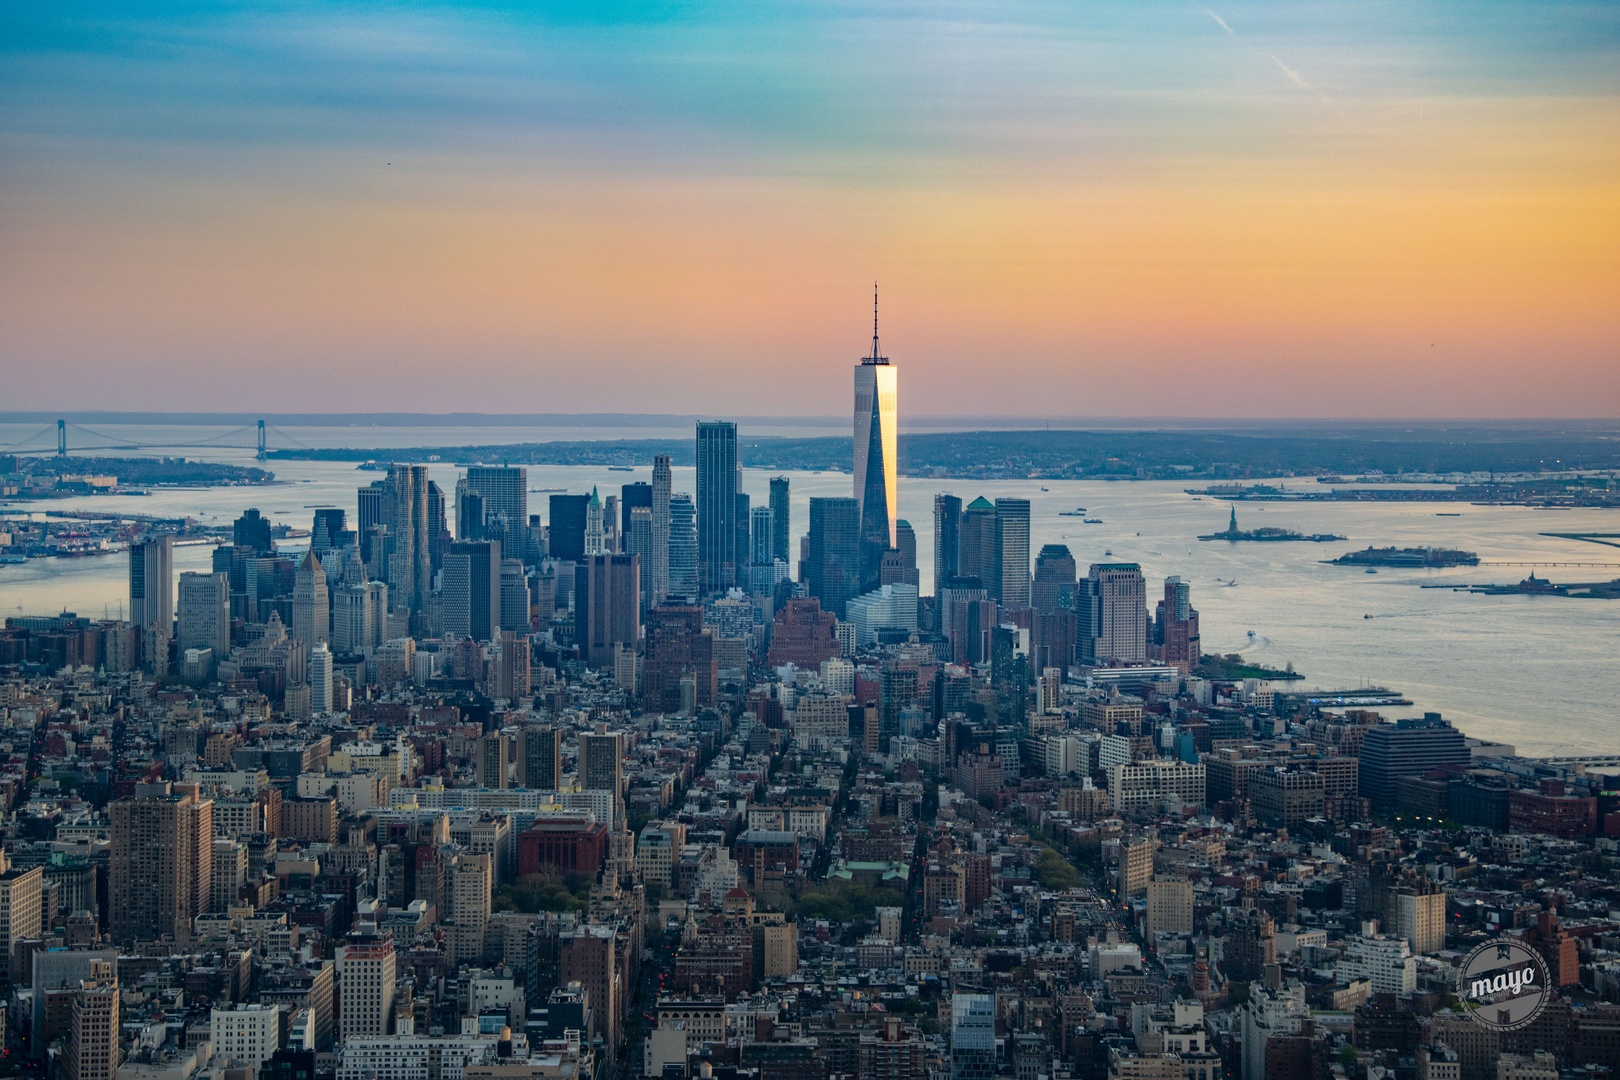 New York Skyline Sunset